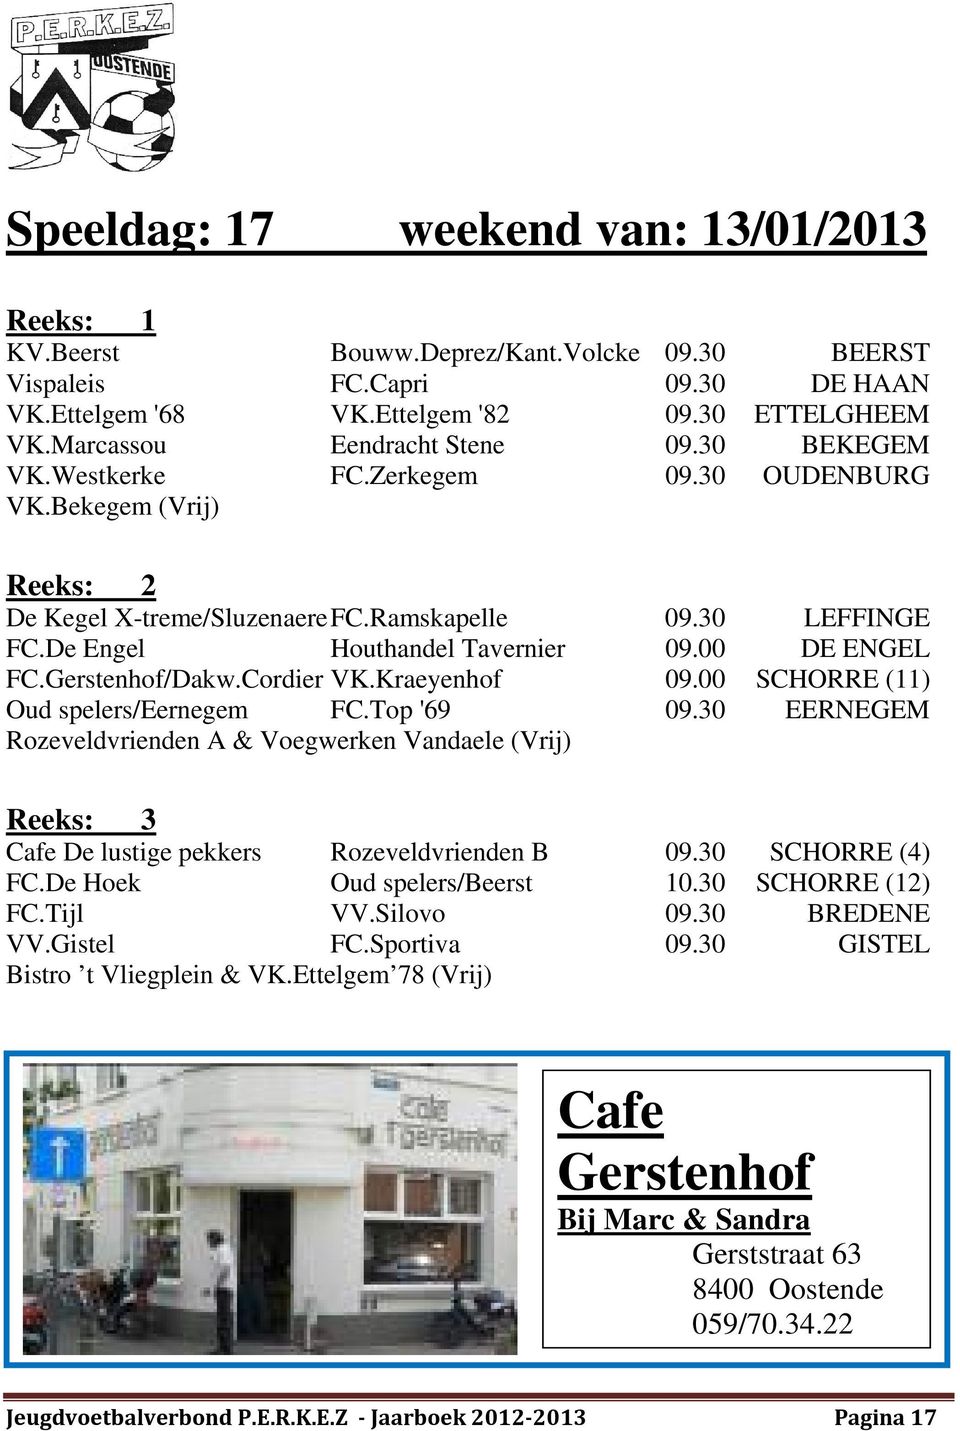 Cordier VK.Kraeyenhof 09.00 SCHORRE (11) Oud spelers/eernegem FC.Top '69 09.30 EERNEGEM Rozeveldvrienden A & Voegwerken Vandaele (Vrij) Cafe De lustige pekkers Rozeveldvrienden B 09.30 SCHORRE (4) FC.